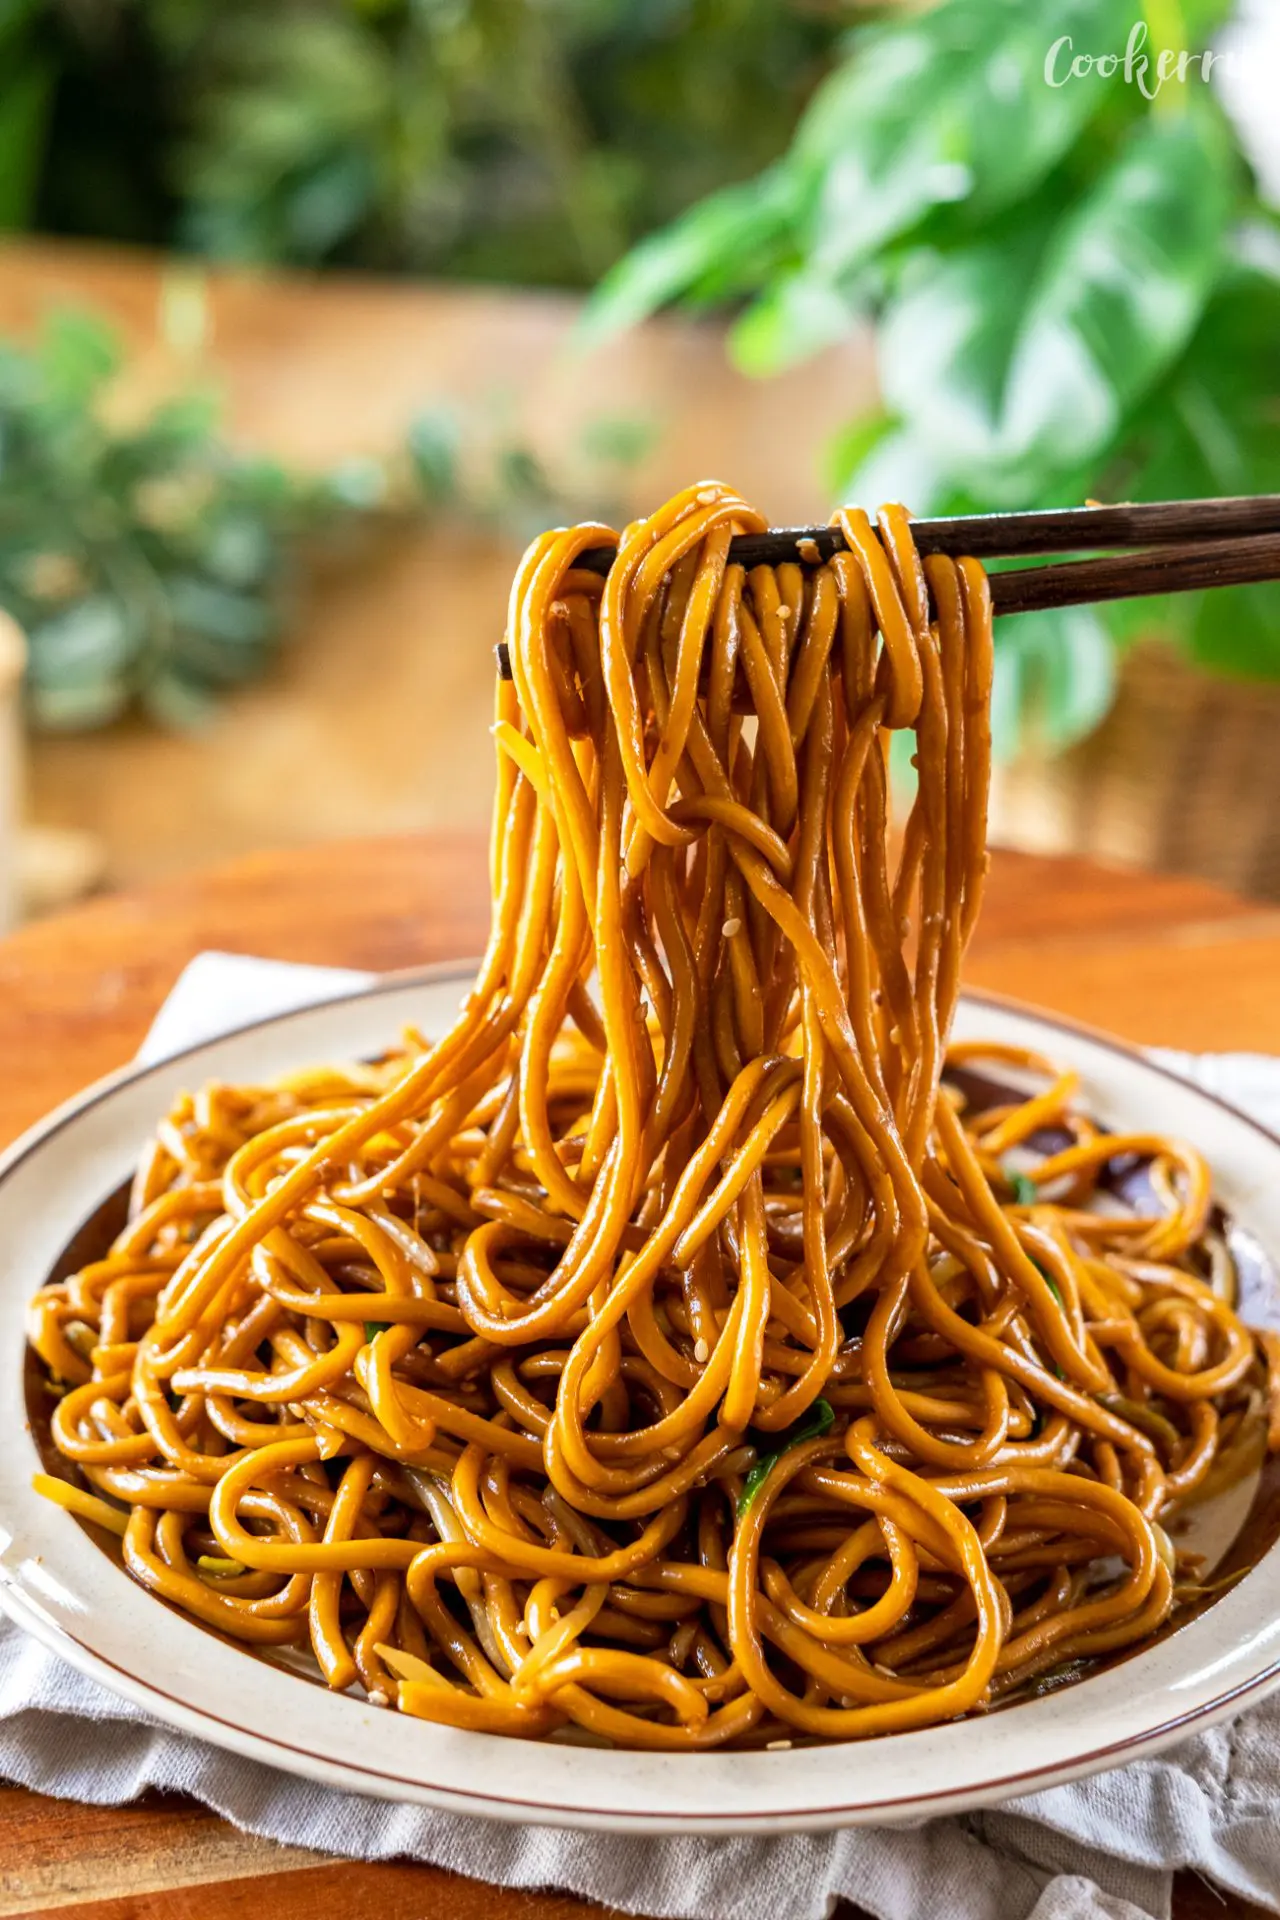 Pan-fried noodles